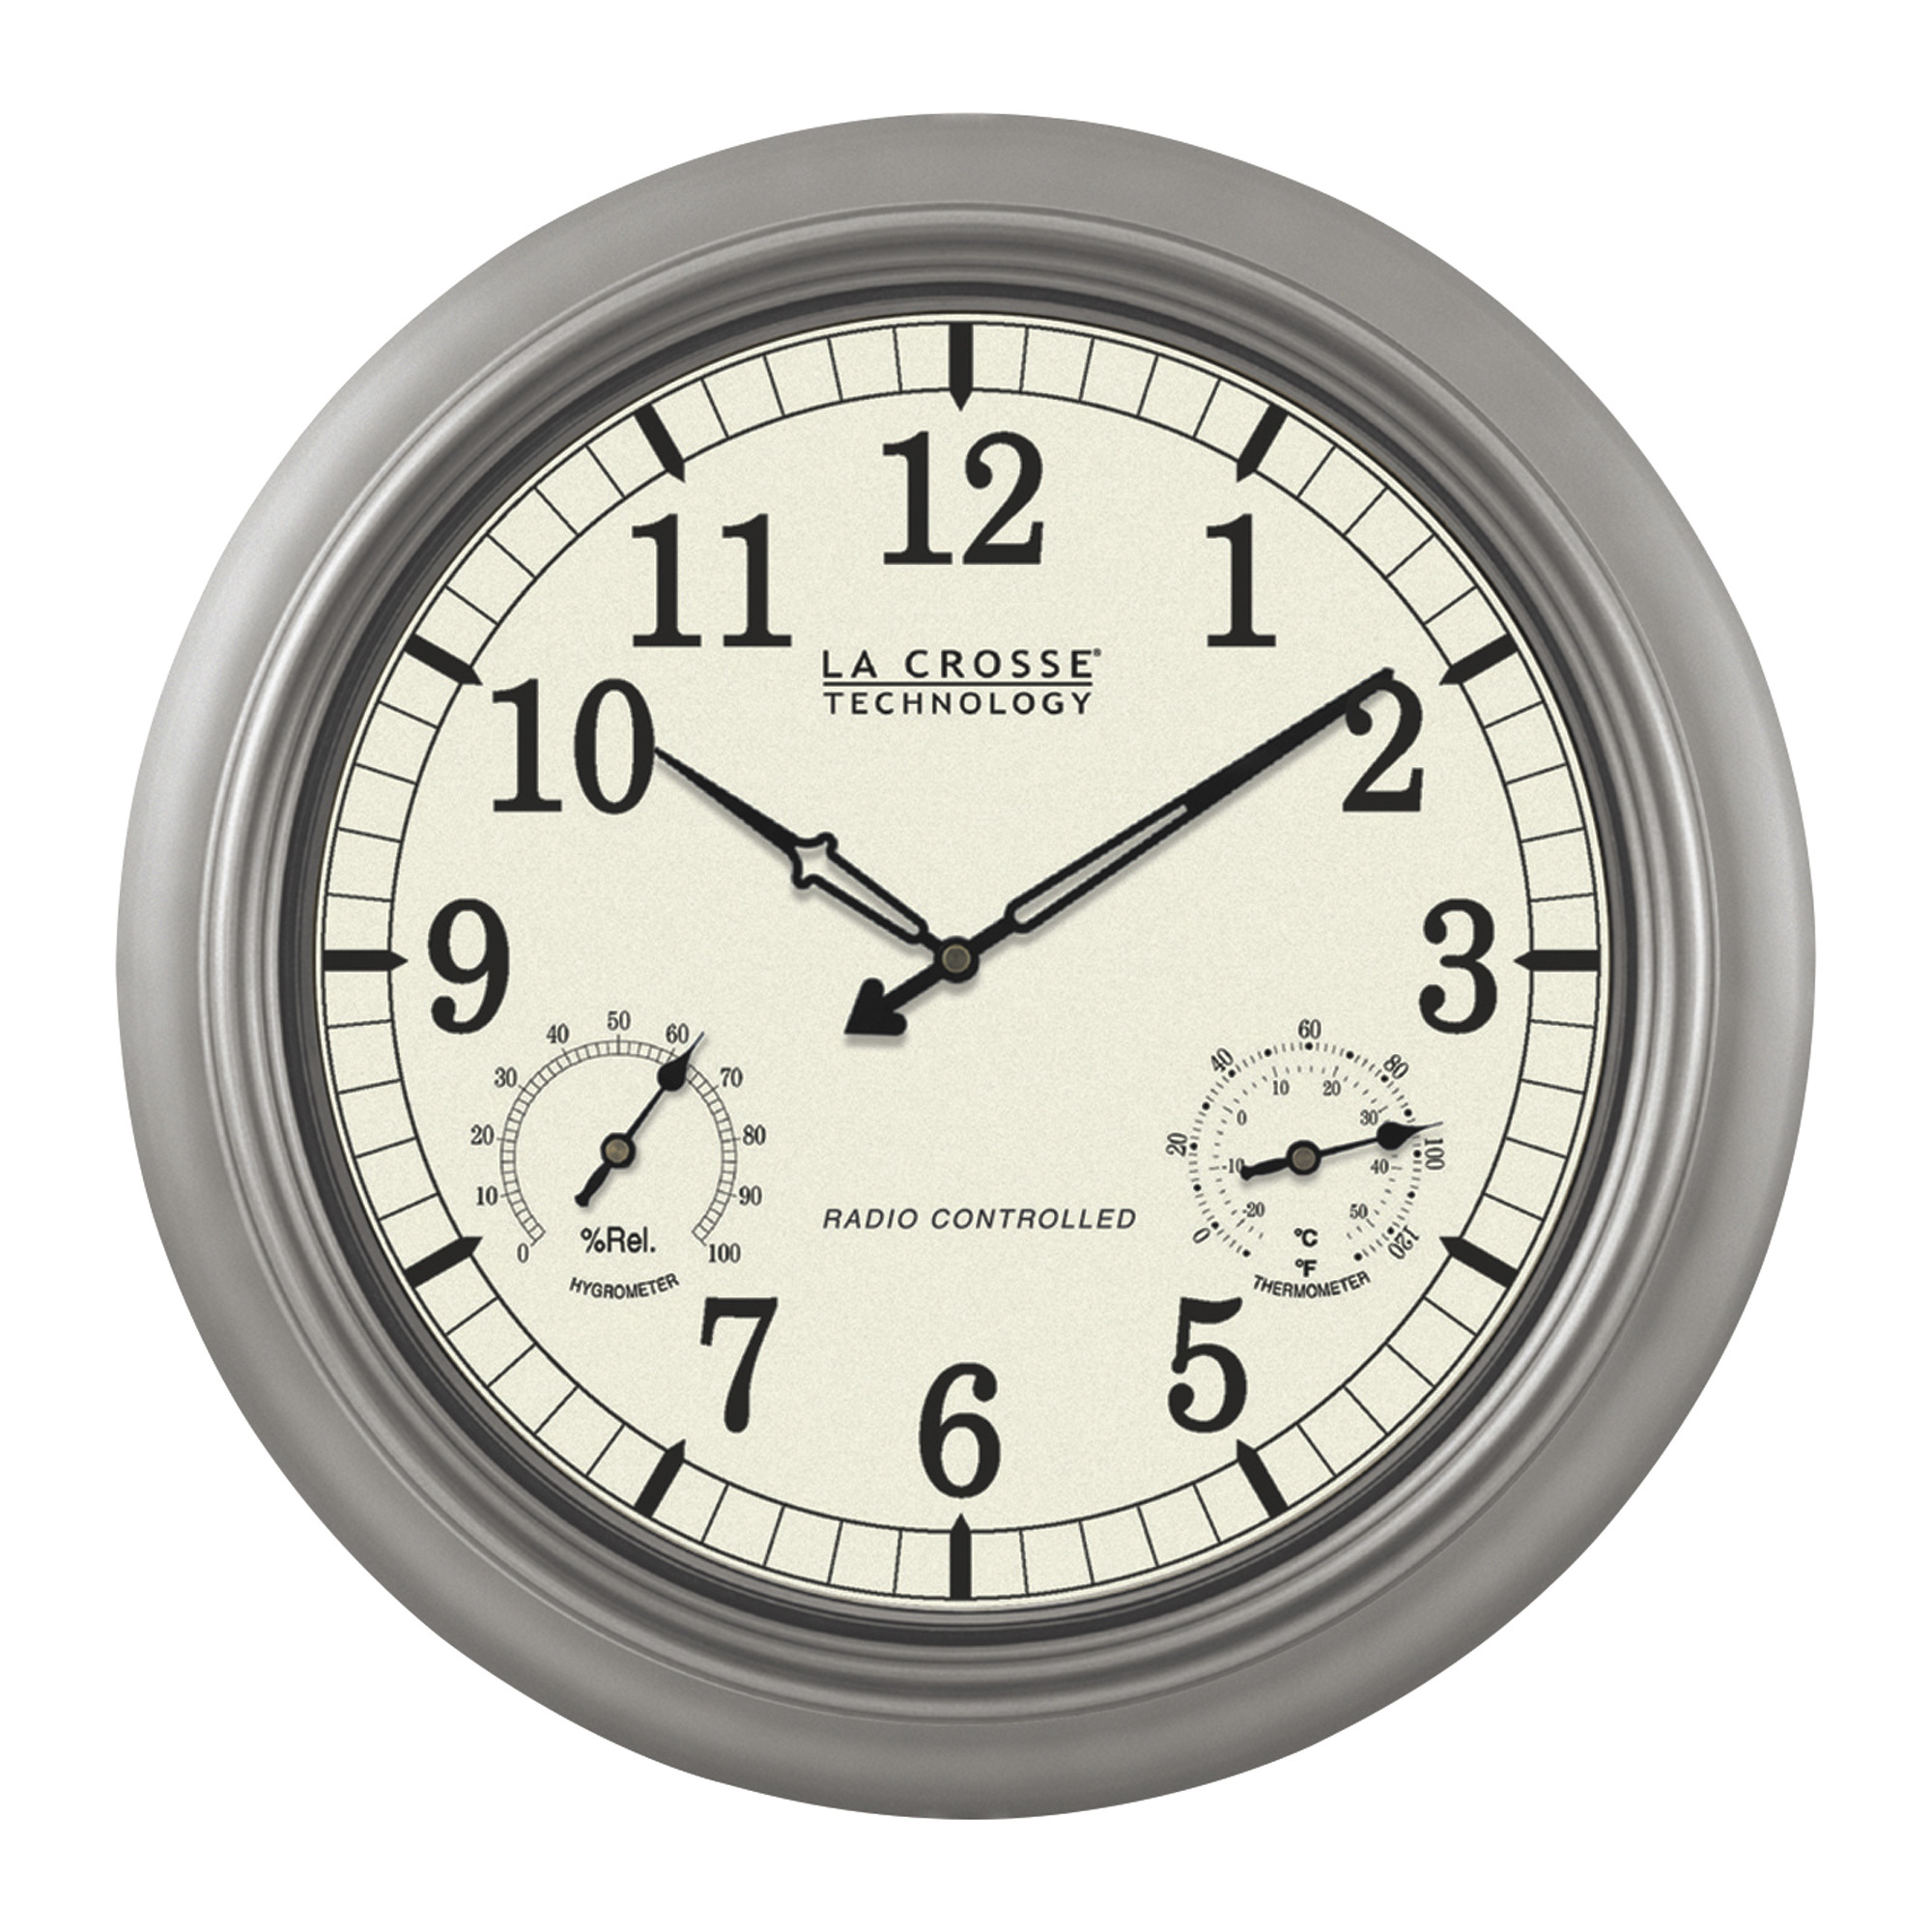 LaCrosse Technology Atomic Wall Clock â 18Inch, Analog, Model WT-3181PL